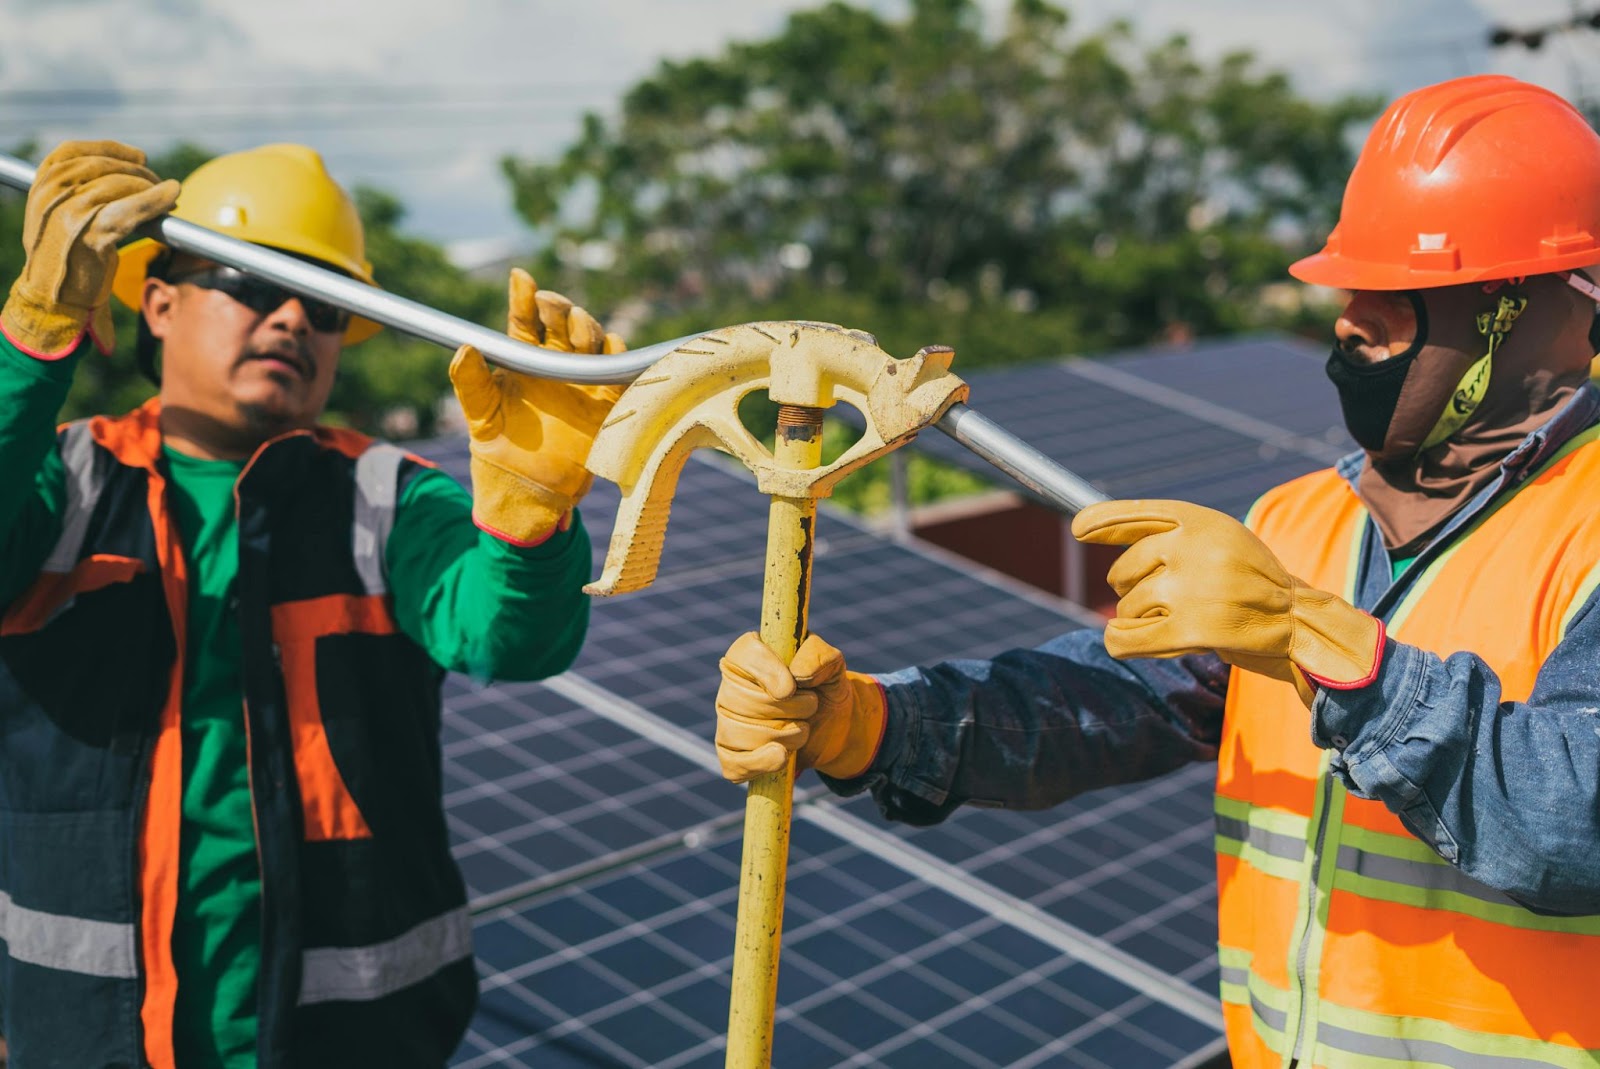 Workmen installing solar panels